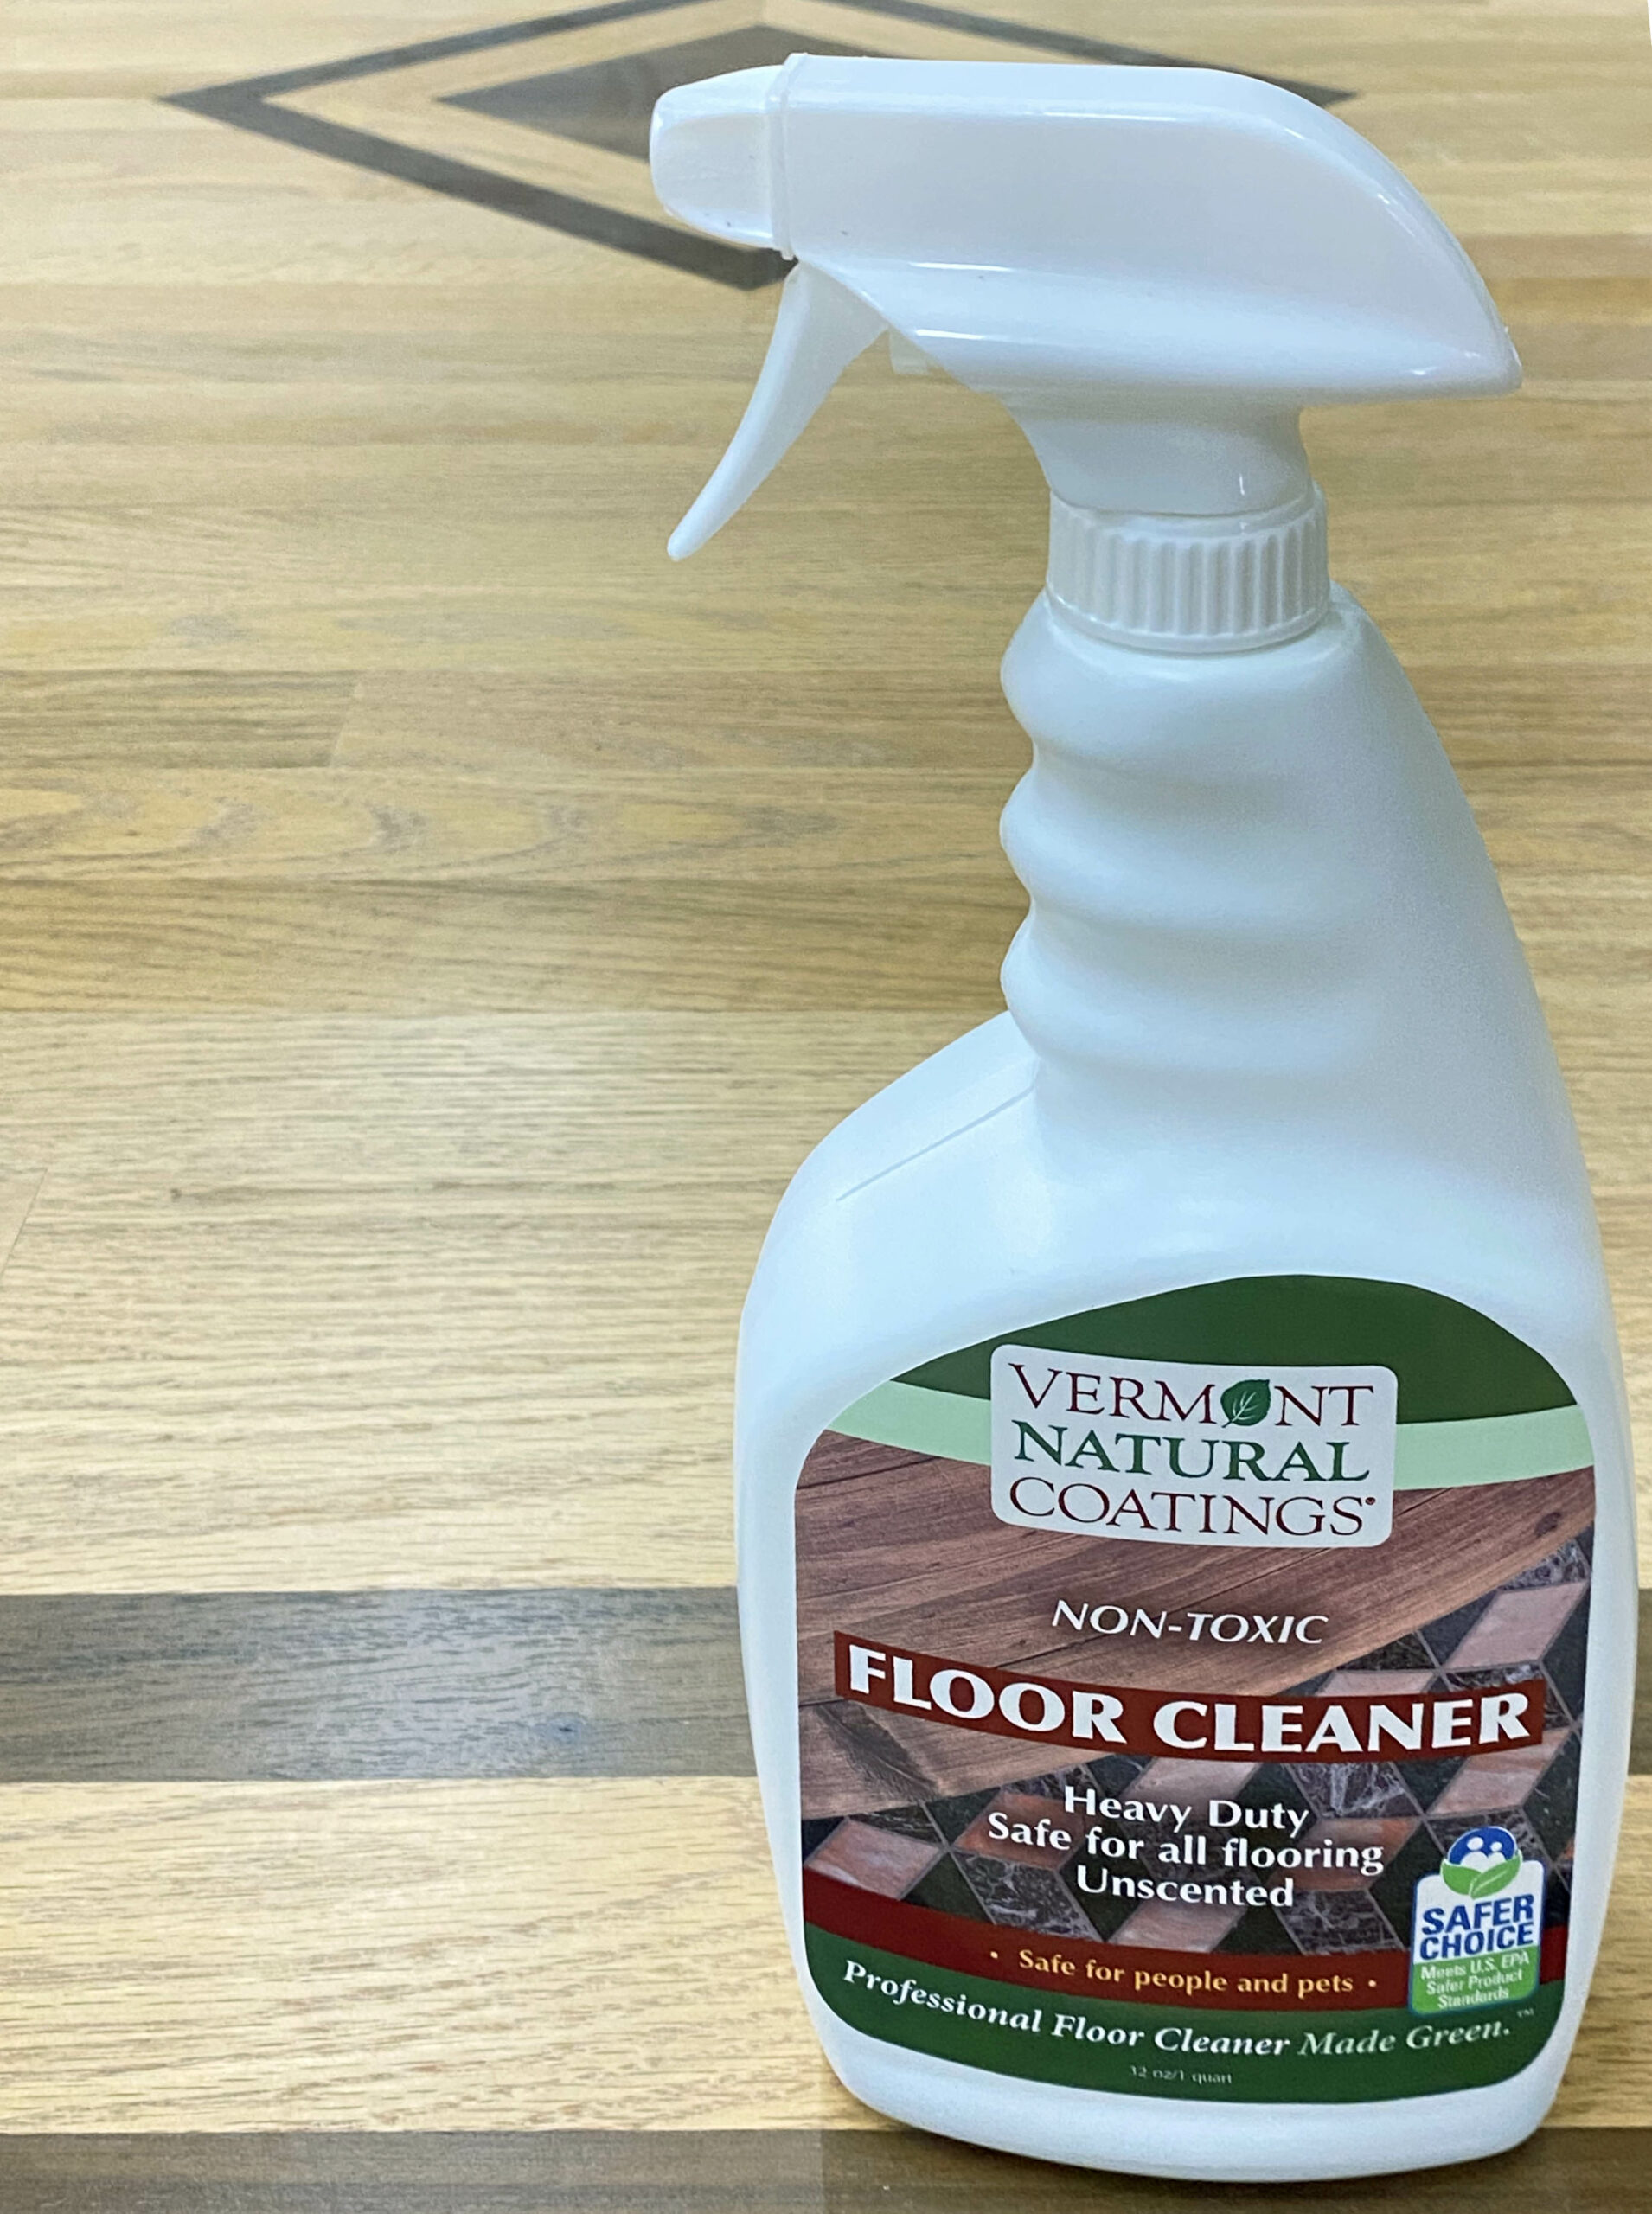 Non-Toxic Biodegradable Floor Cleaner